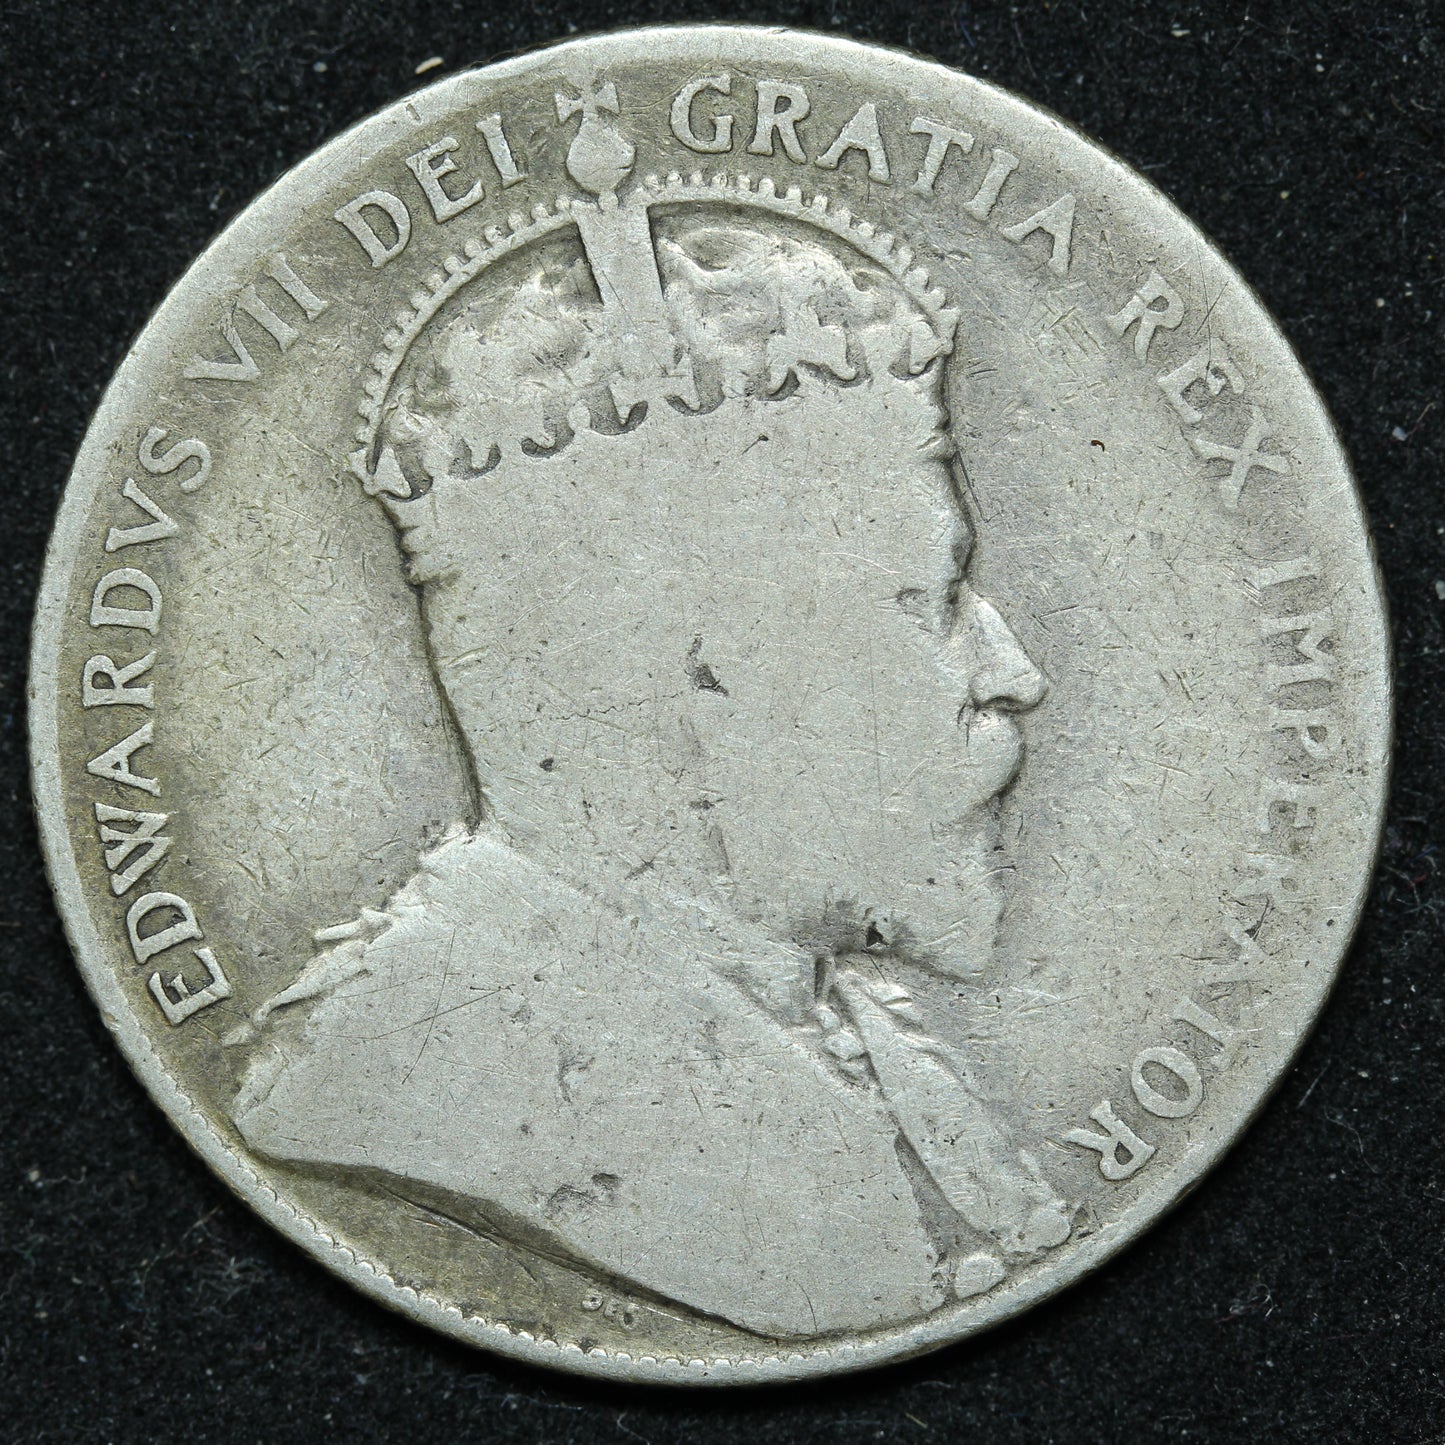 1904 Newfoundland 50 Cents Silver Coin - Edward VII - KM #11